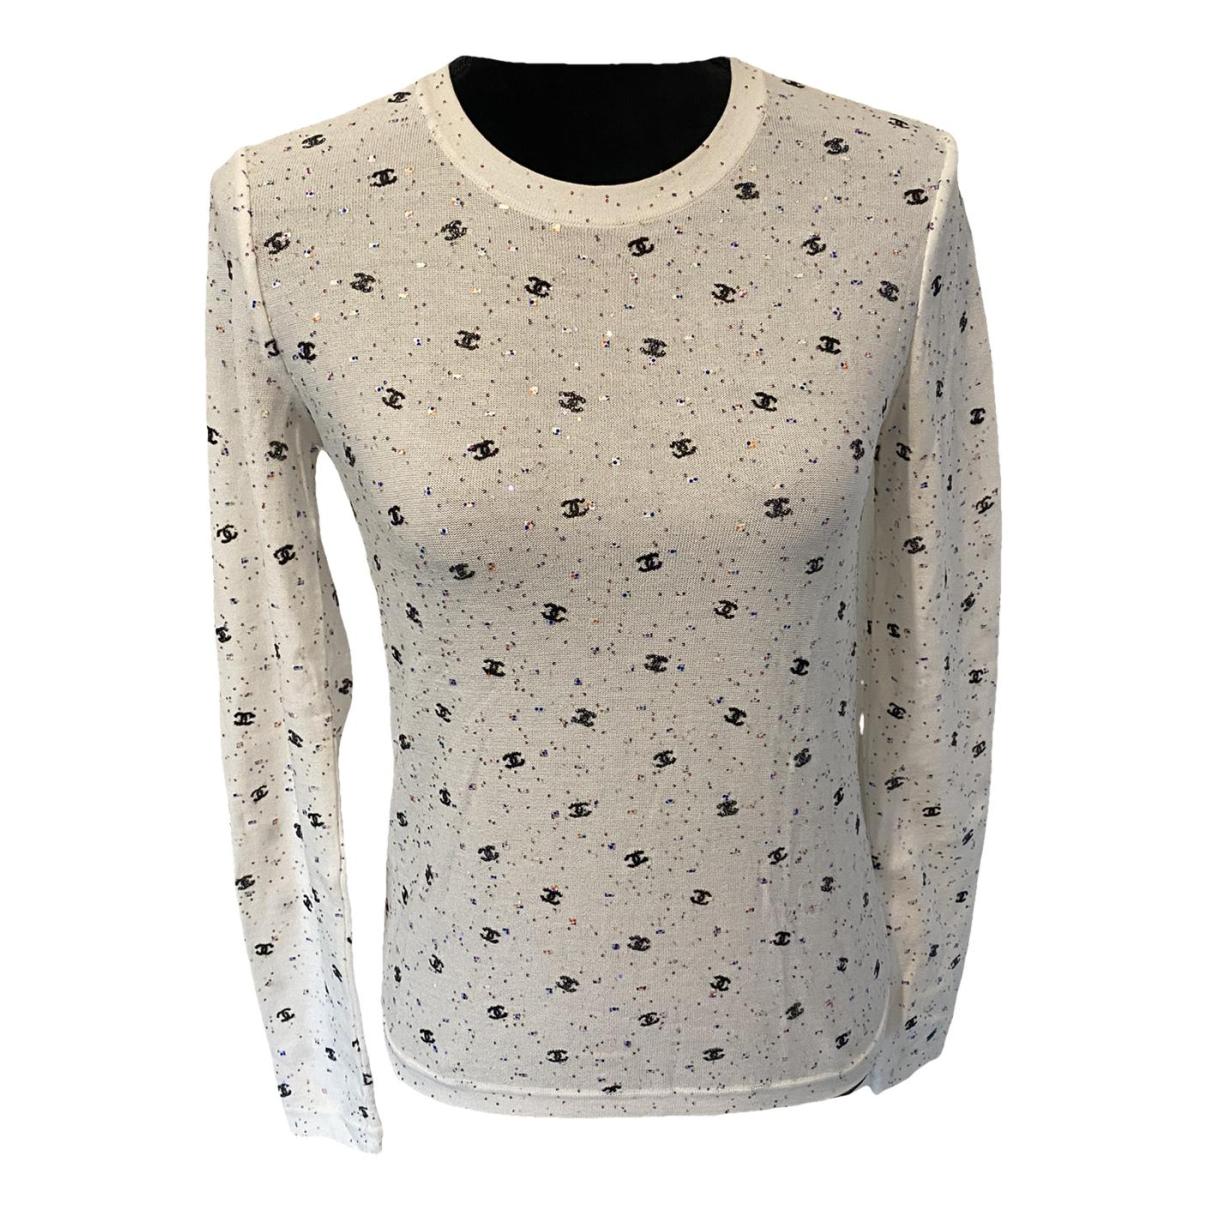 Chanel 2023 printed sweater - Gem